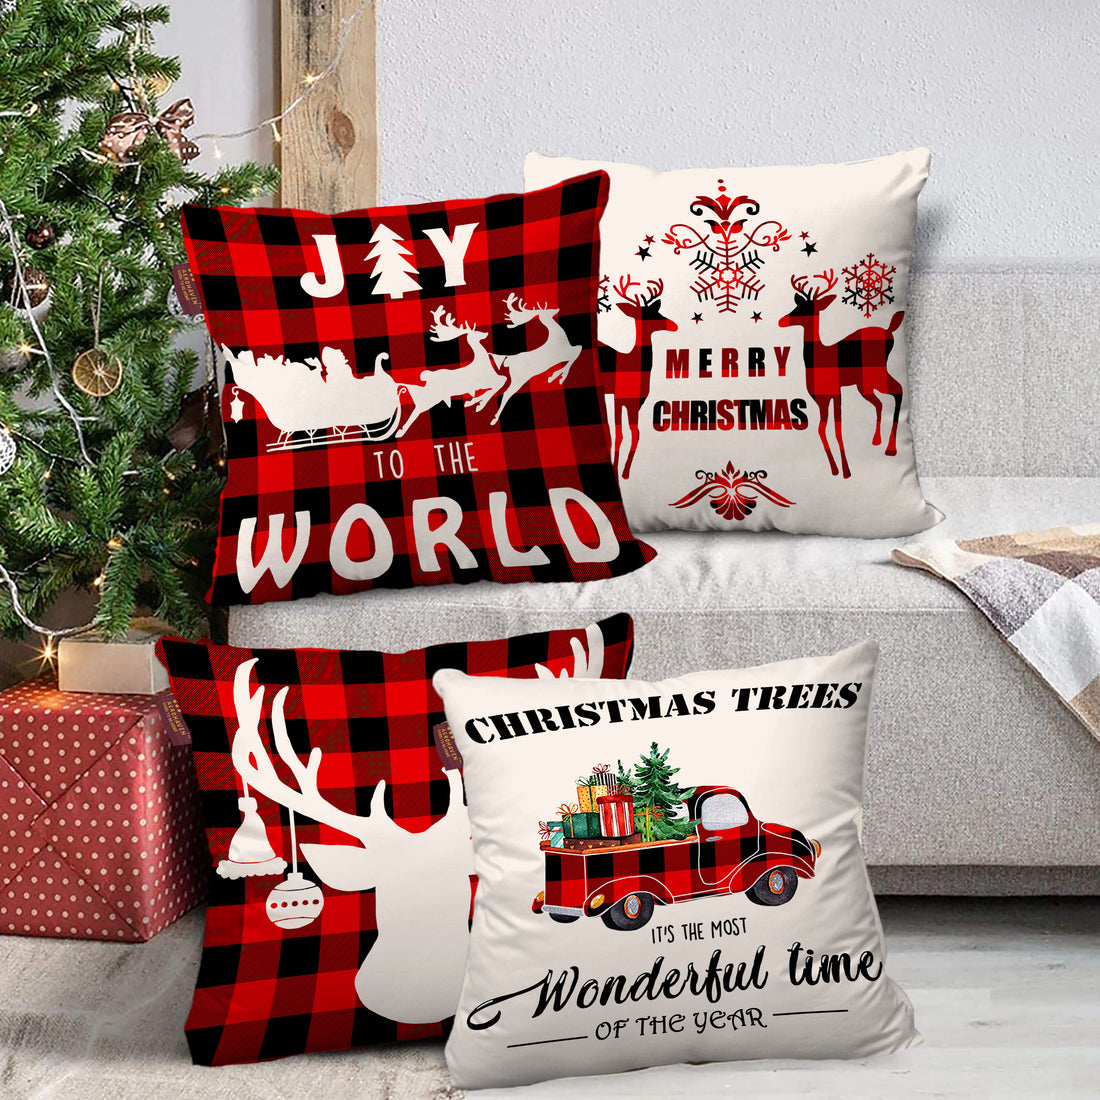 Set of 4 Christmas Designer Decorative Throw Pillow/Cushion Covers